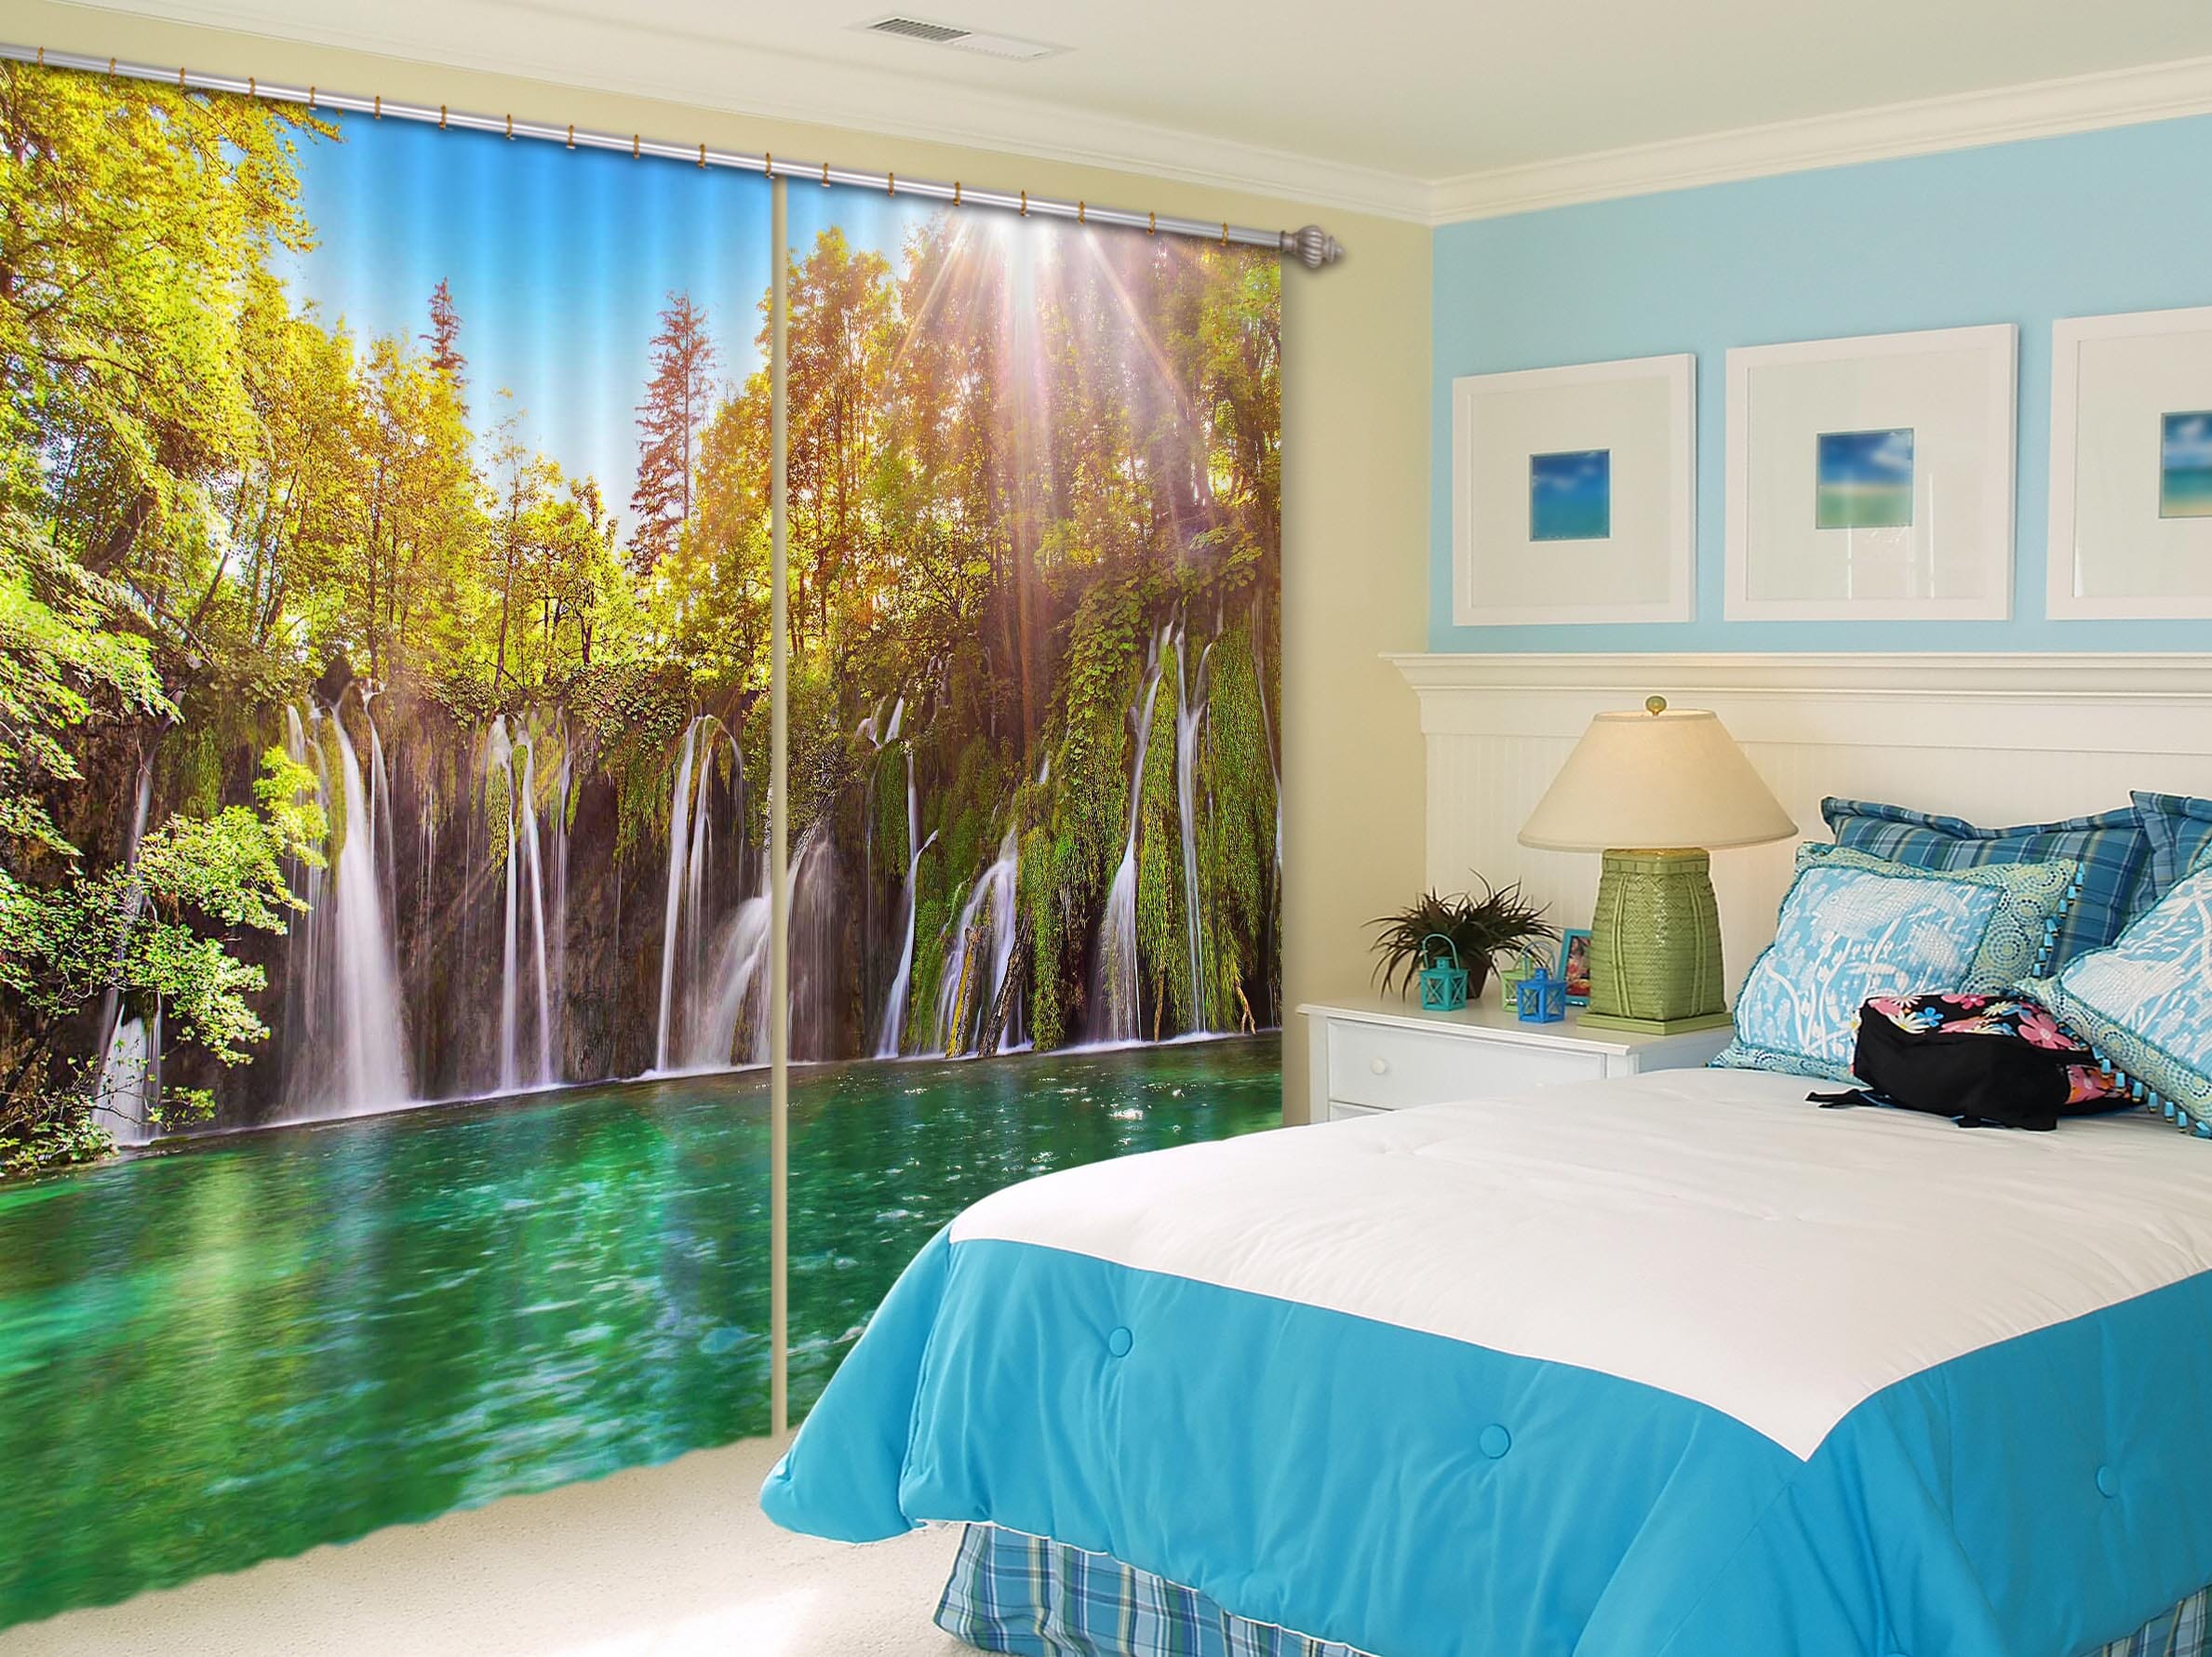 3D Forest Waterfall 109 Curtains Drapes Wallpaper AJ Wallpaper 